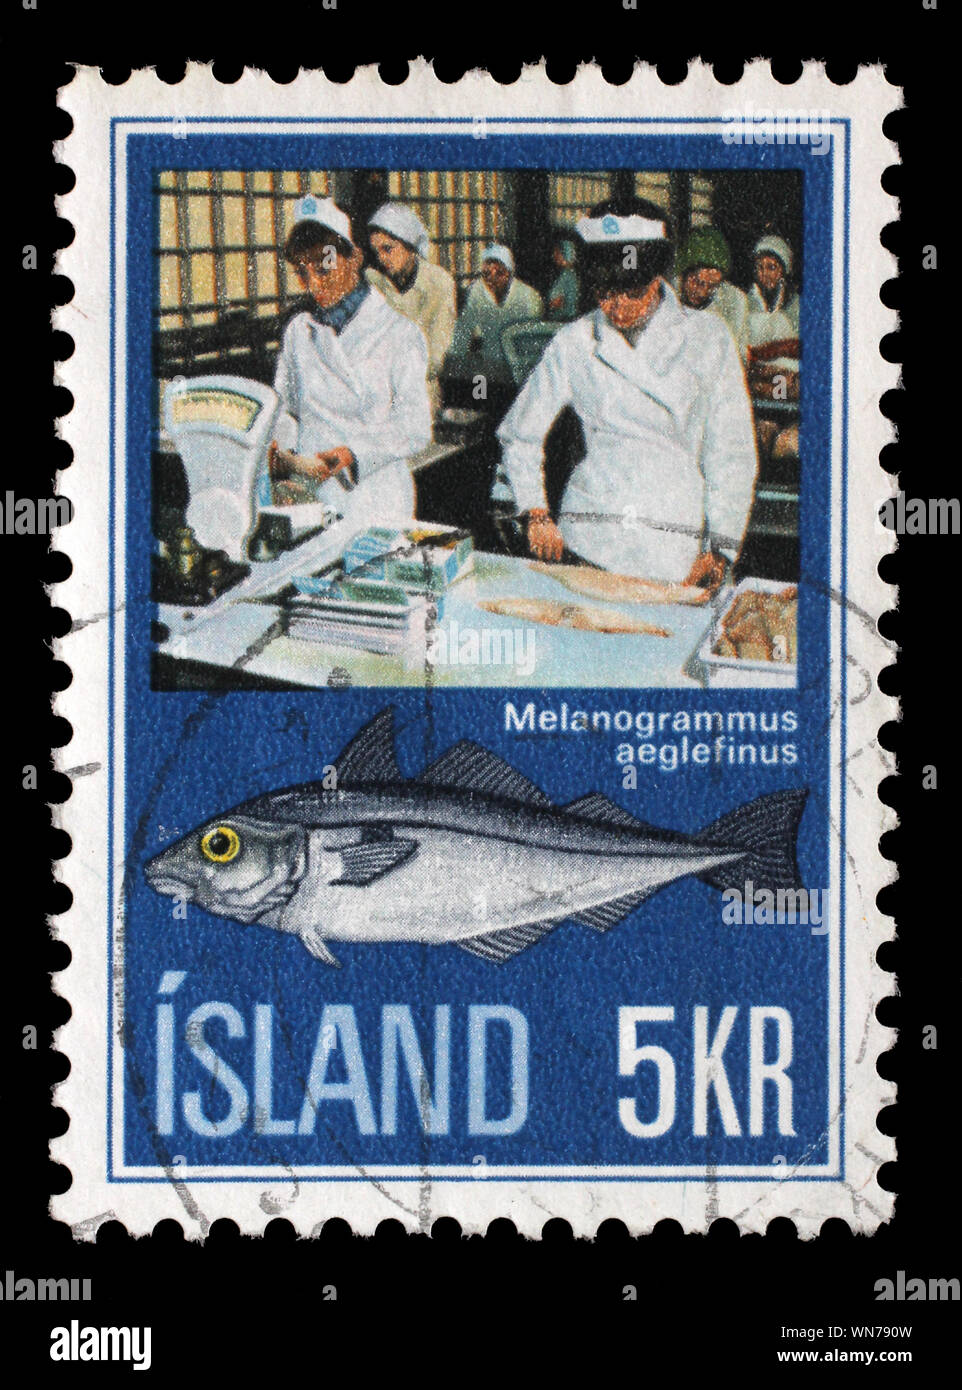 Sello emitido en Islandia muestra Eglefino (Melanogrammus aeglefinus), industria pesquera islandesa, circa 1971. Foto de stock